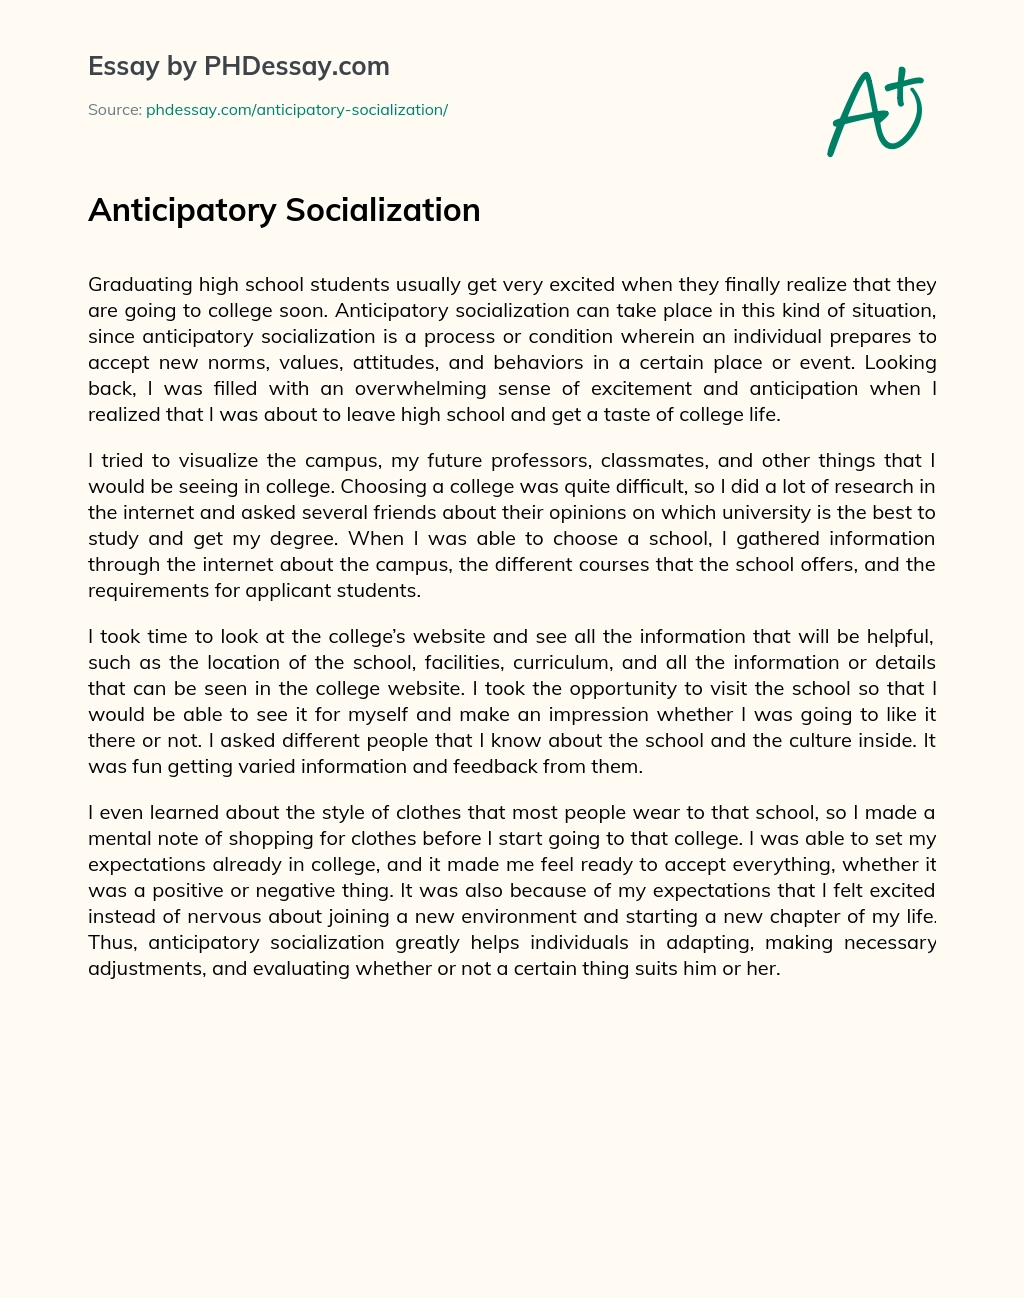 Anticipatory Socialization essay